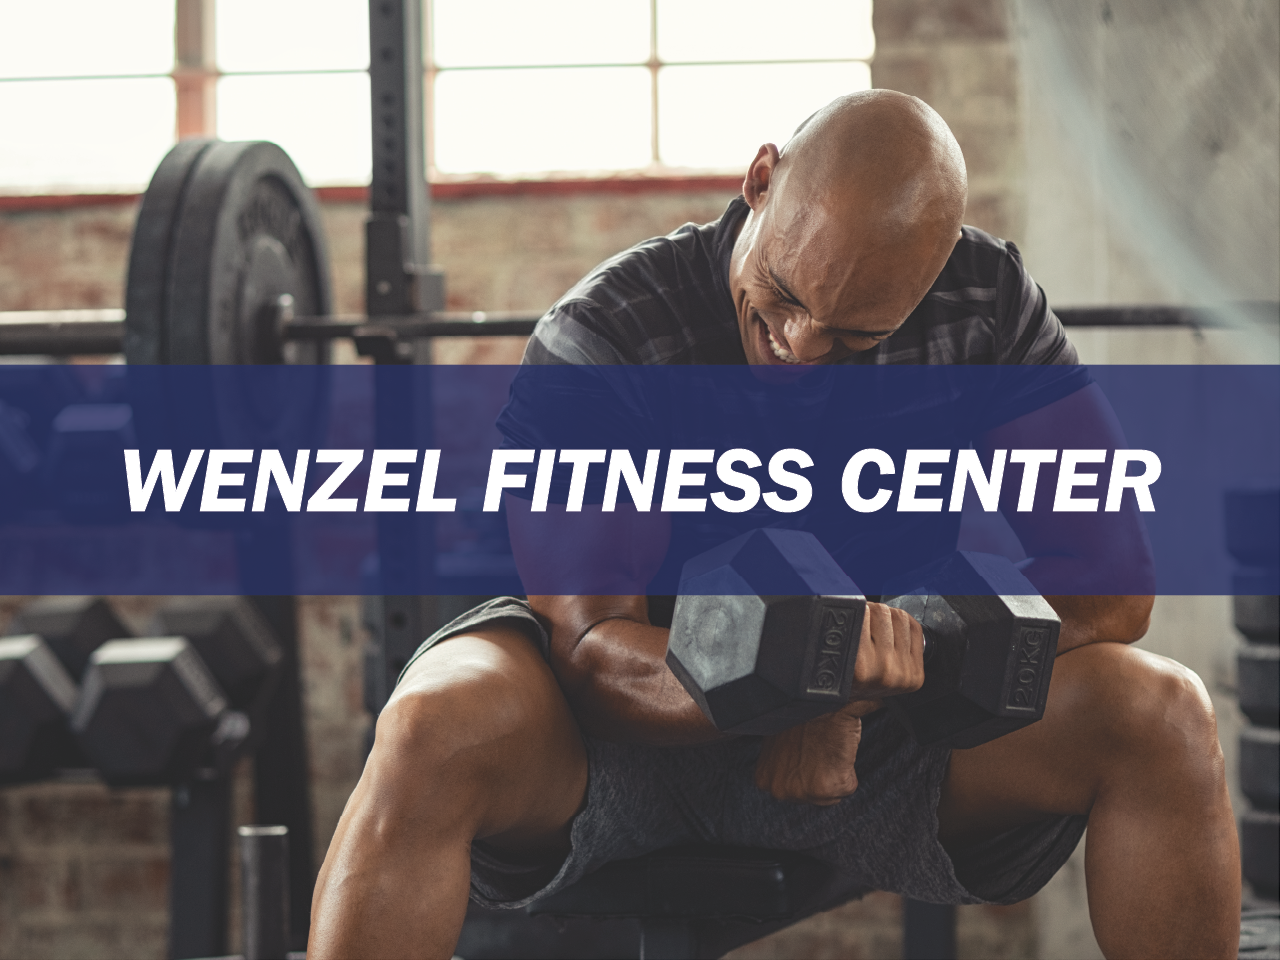 Wenzel Fitness Center Survey